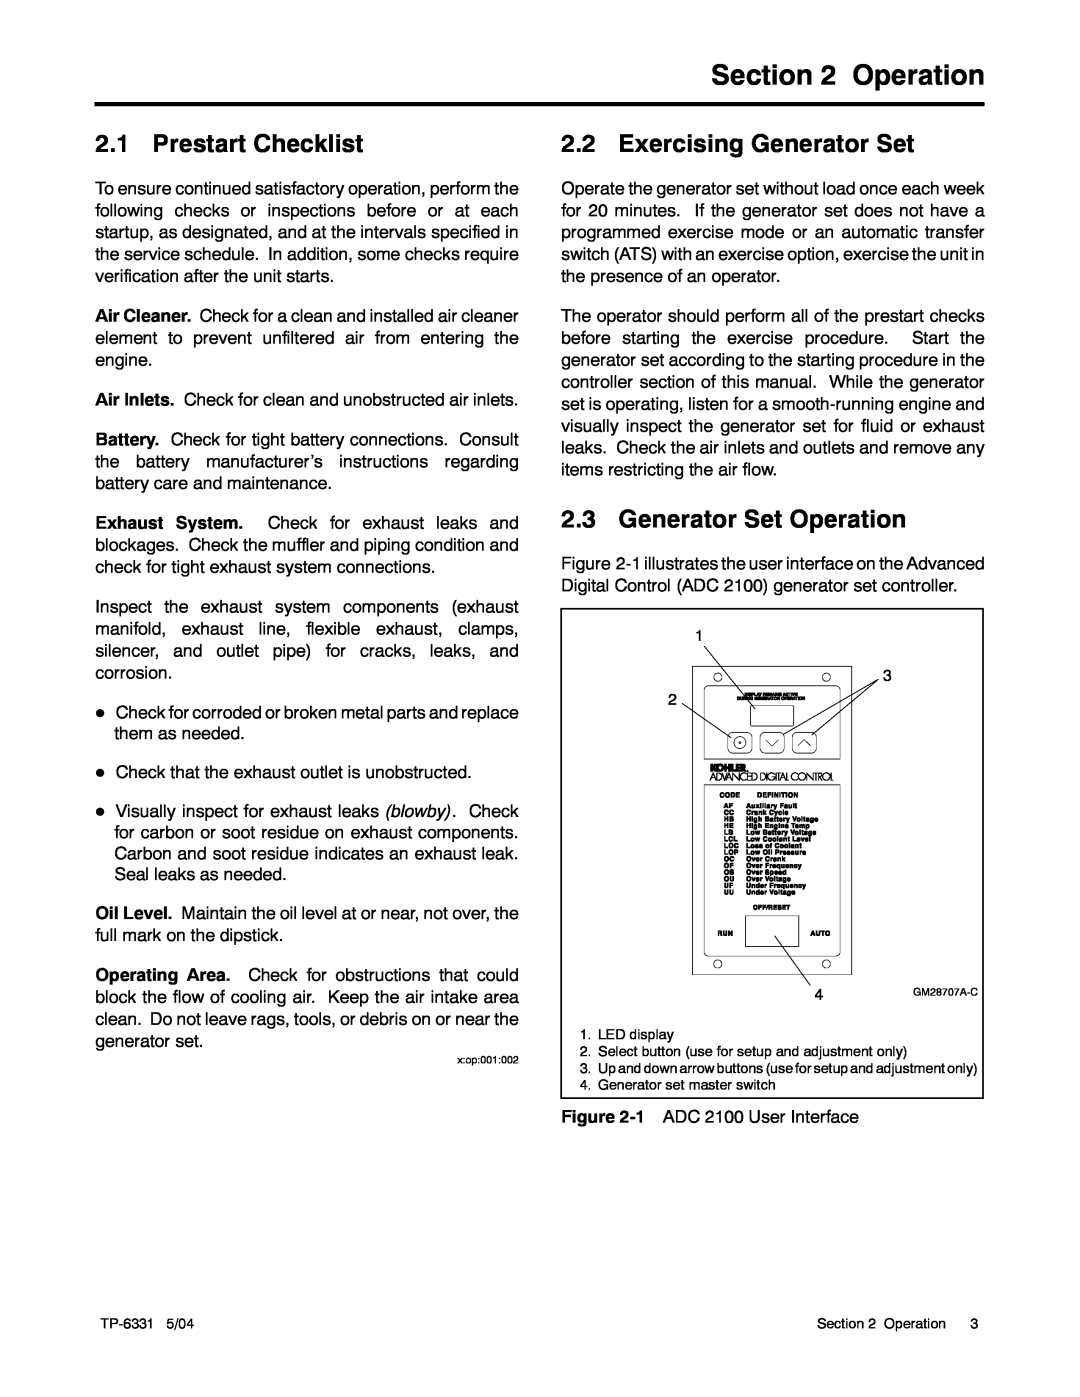 Kohler 12RES, 8.5RES manual Prestart Checklist, Exercising Generator Set, Generator Set Operation 